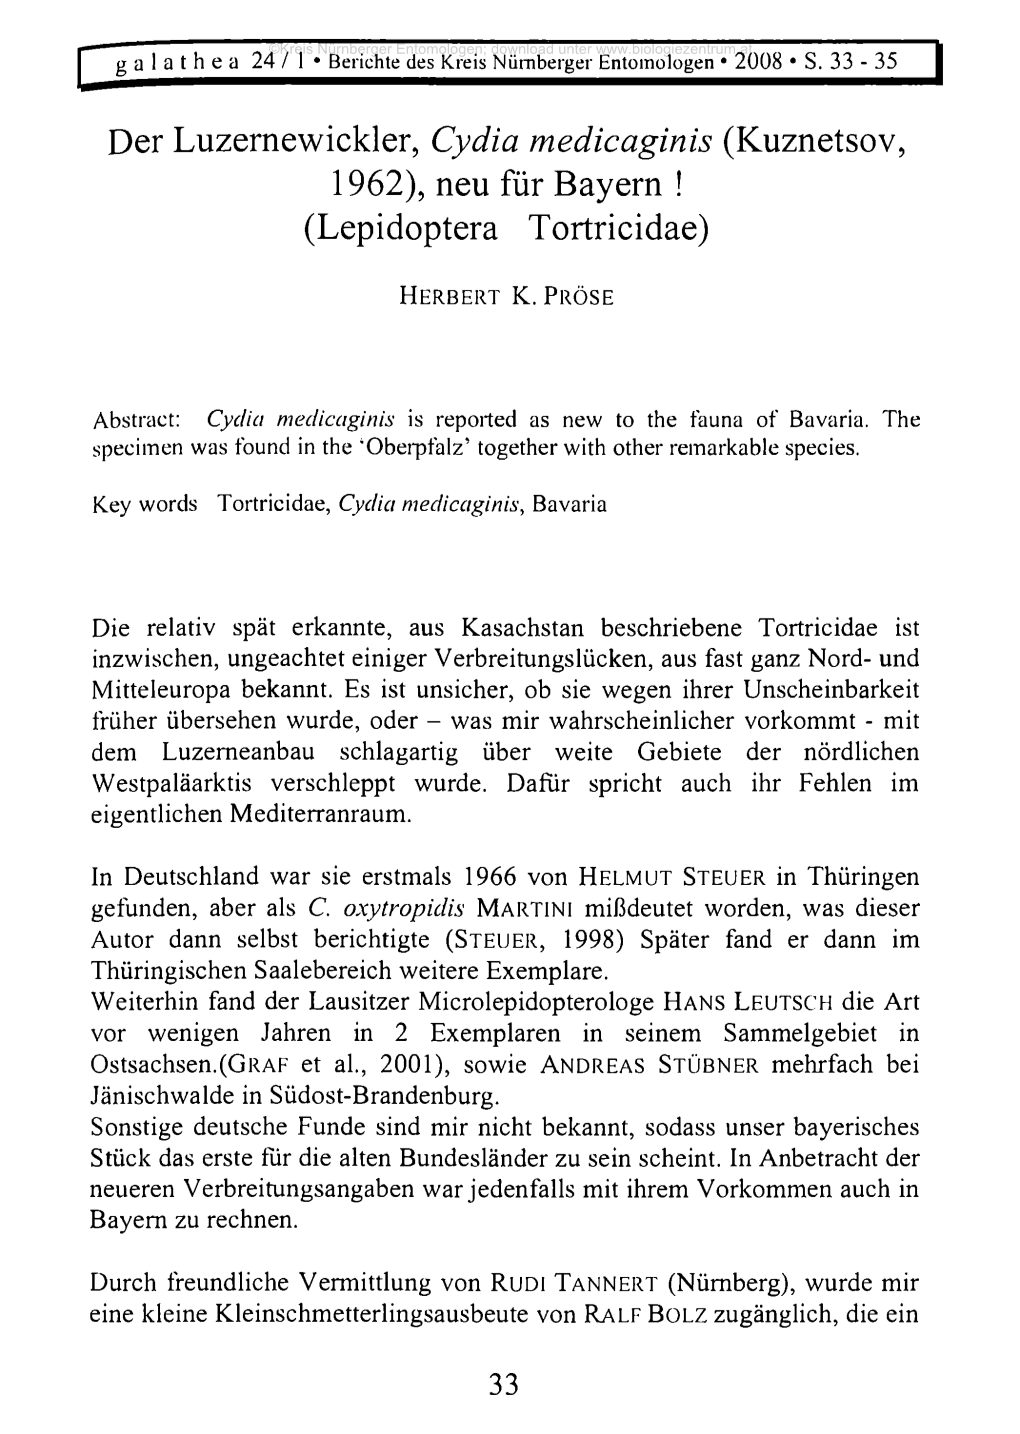 Der Luzernewickler, Cydia Medicaginis (Kuznetsov, 1962), Neu Für Bayern ! (Lepidoptera Tortricidae)